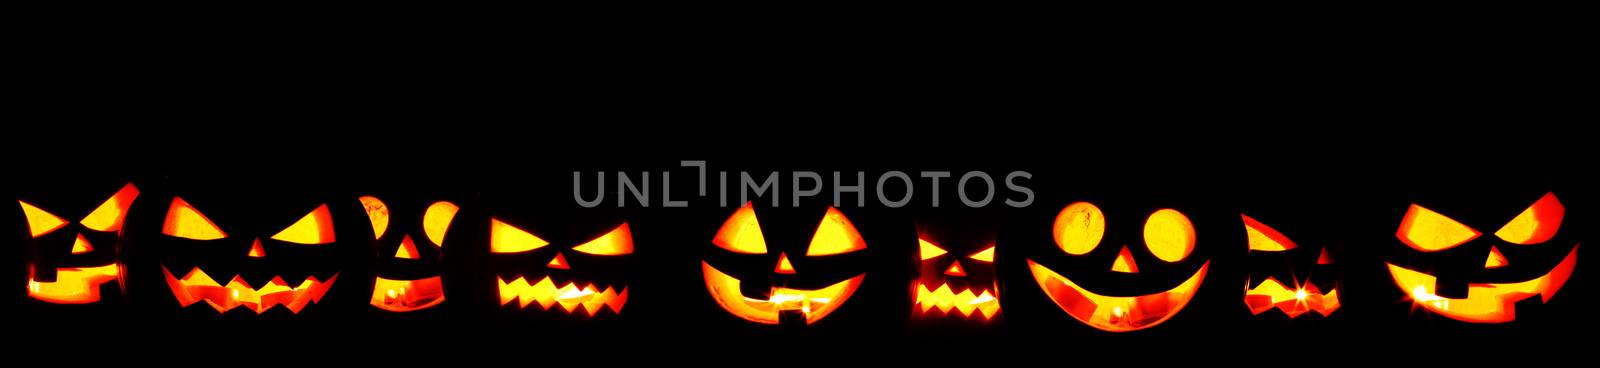 Halloween Pumpkins on black by Yellowj